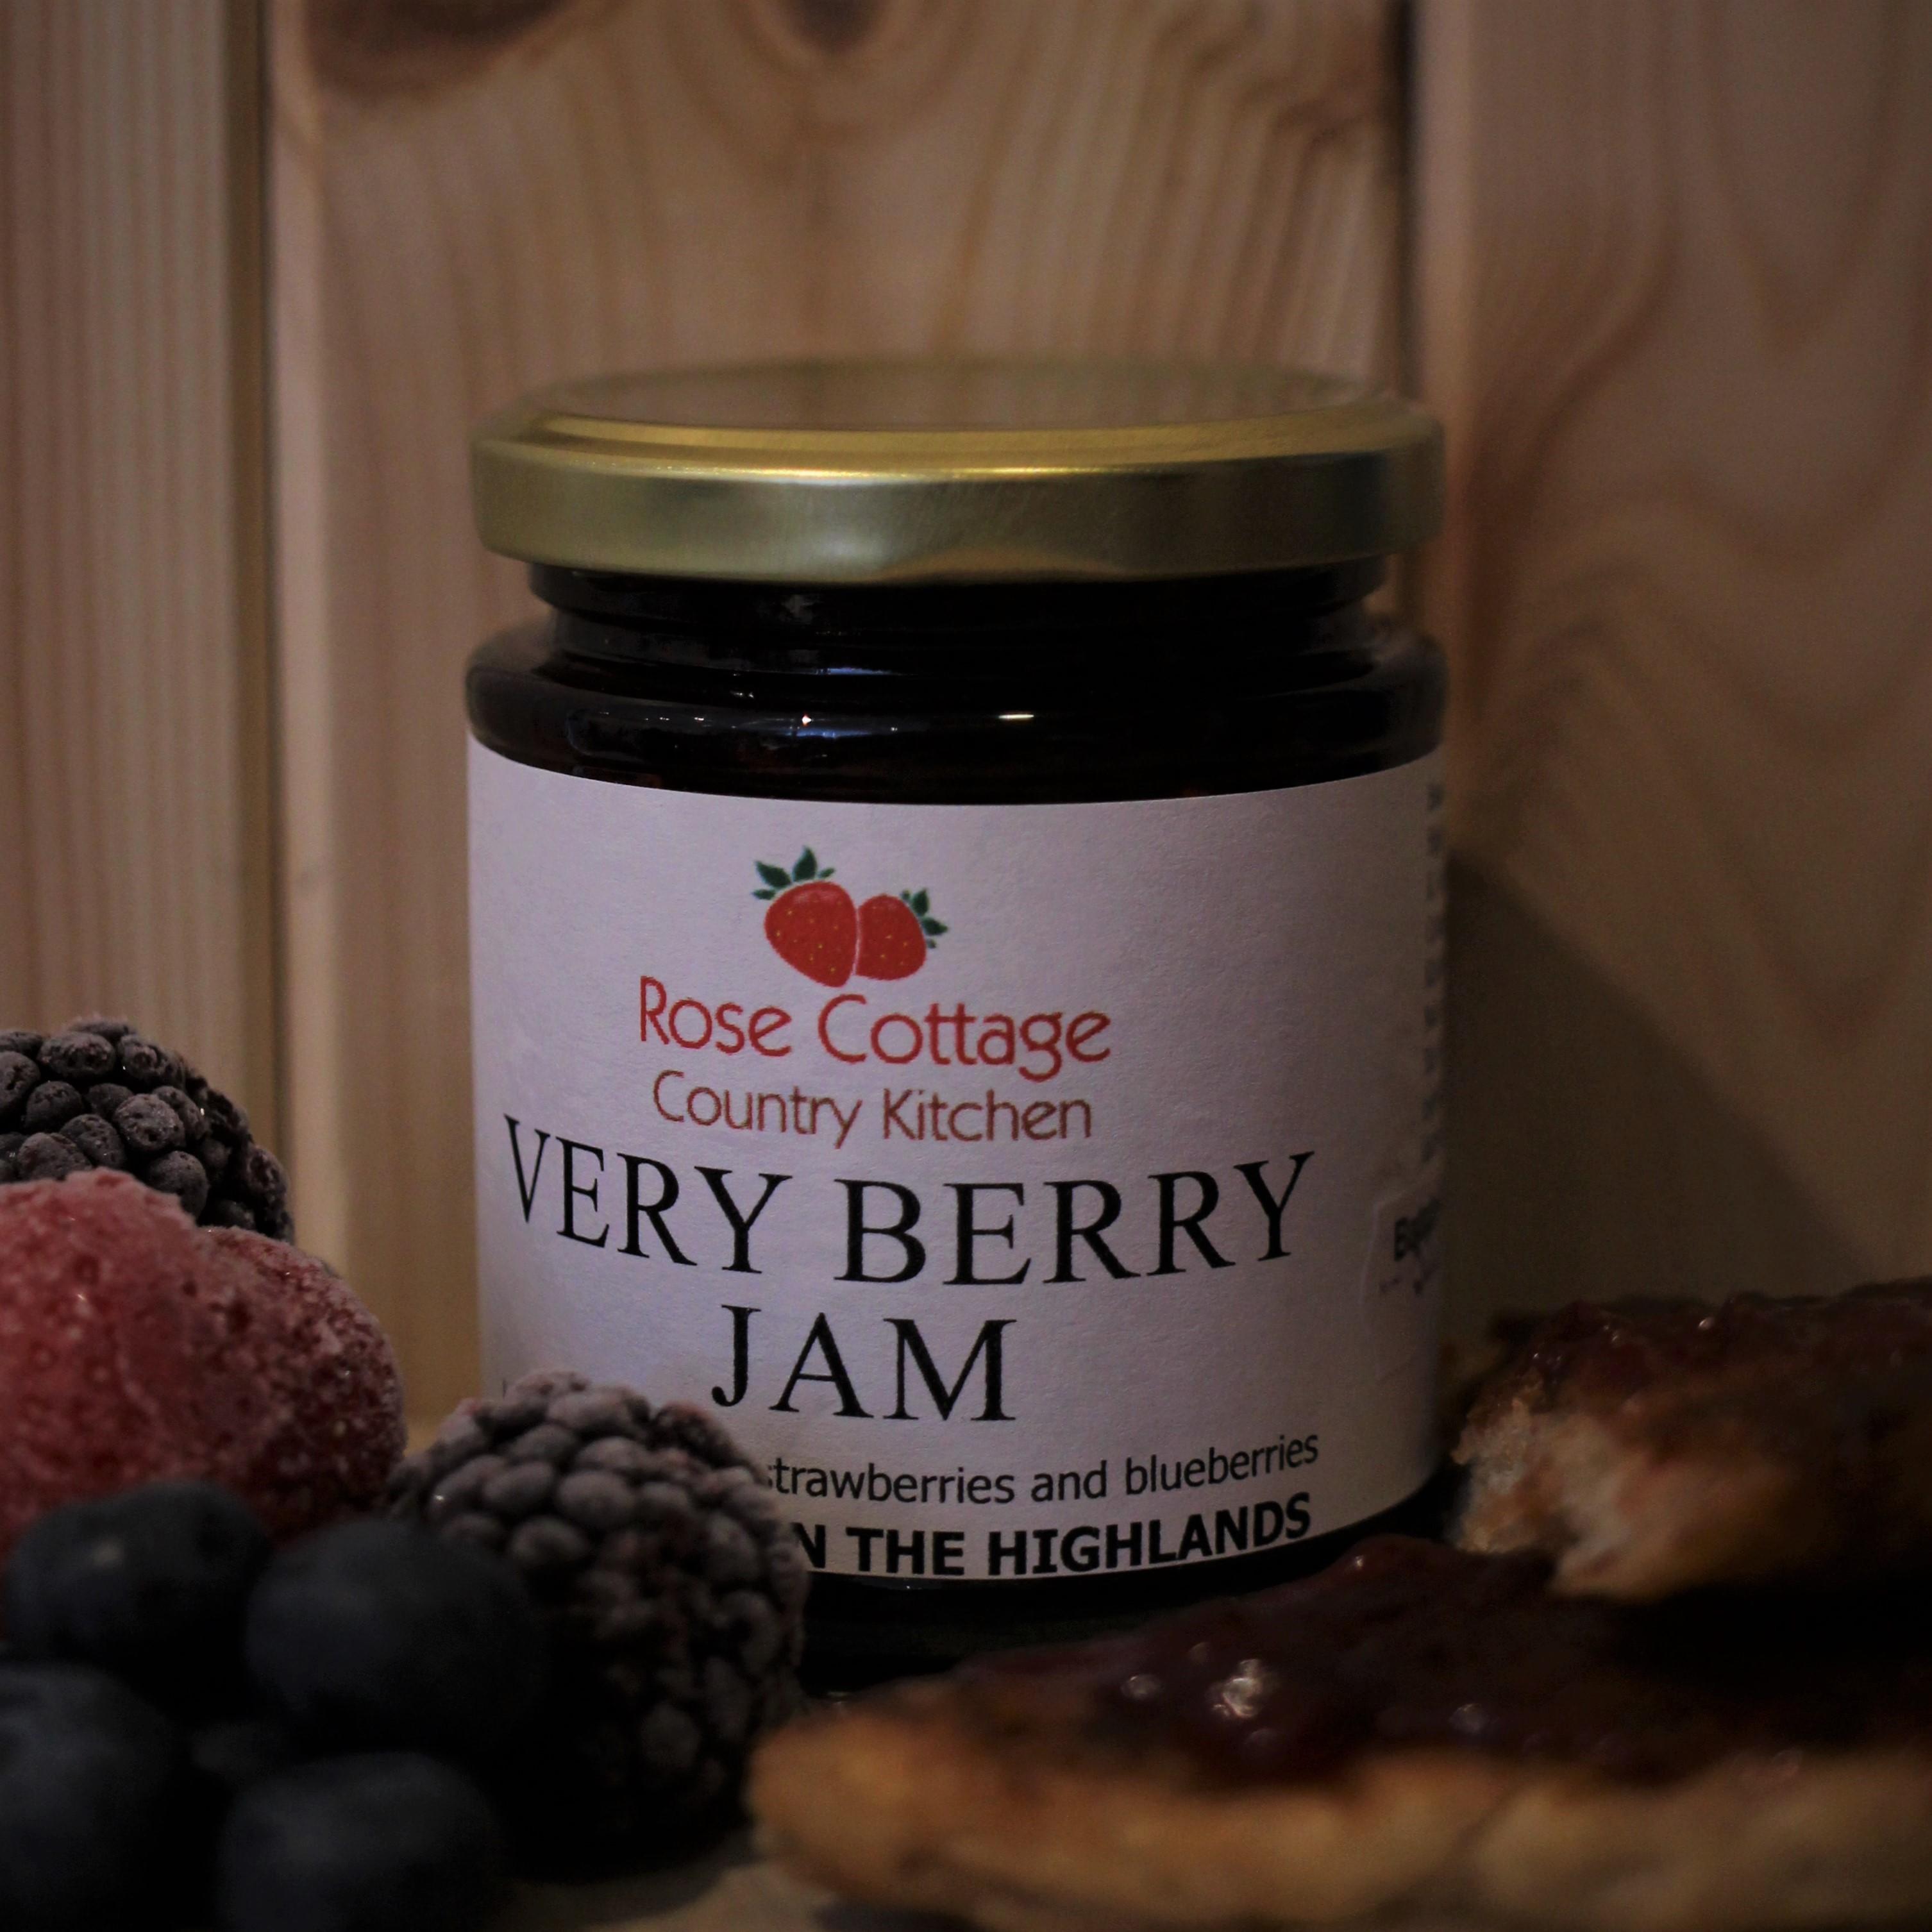 Very Berry Jam